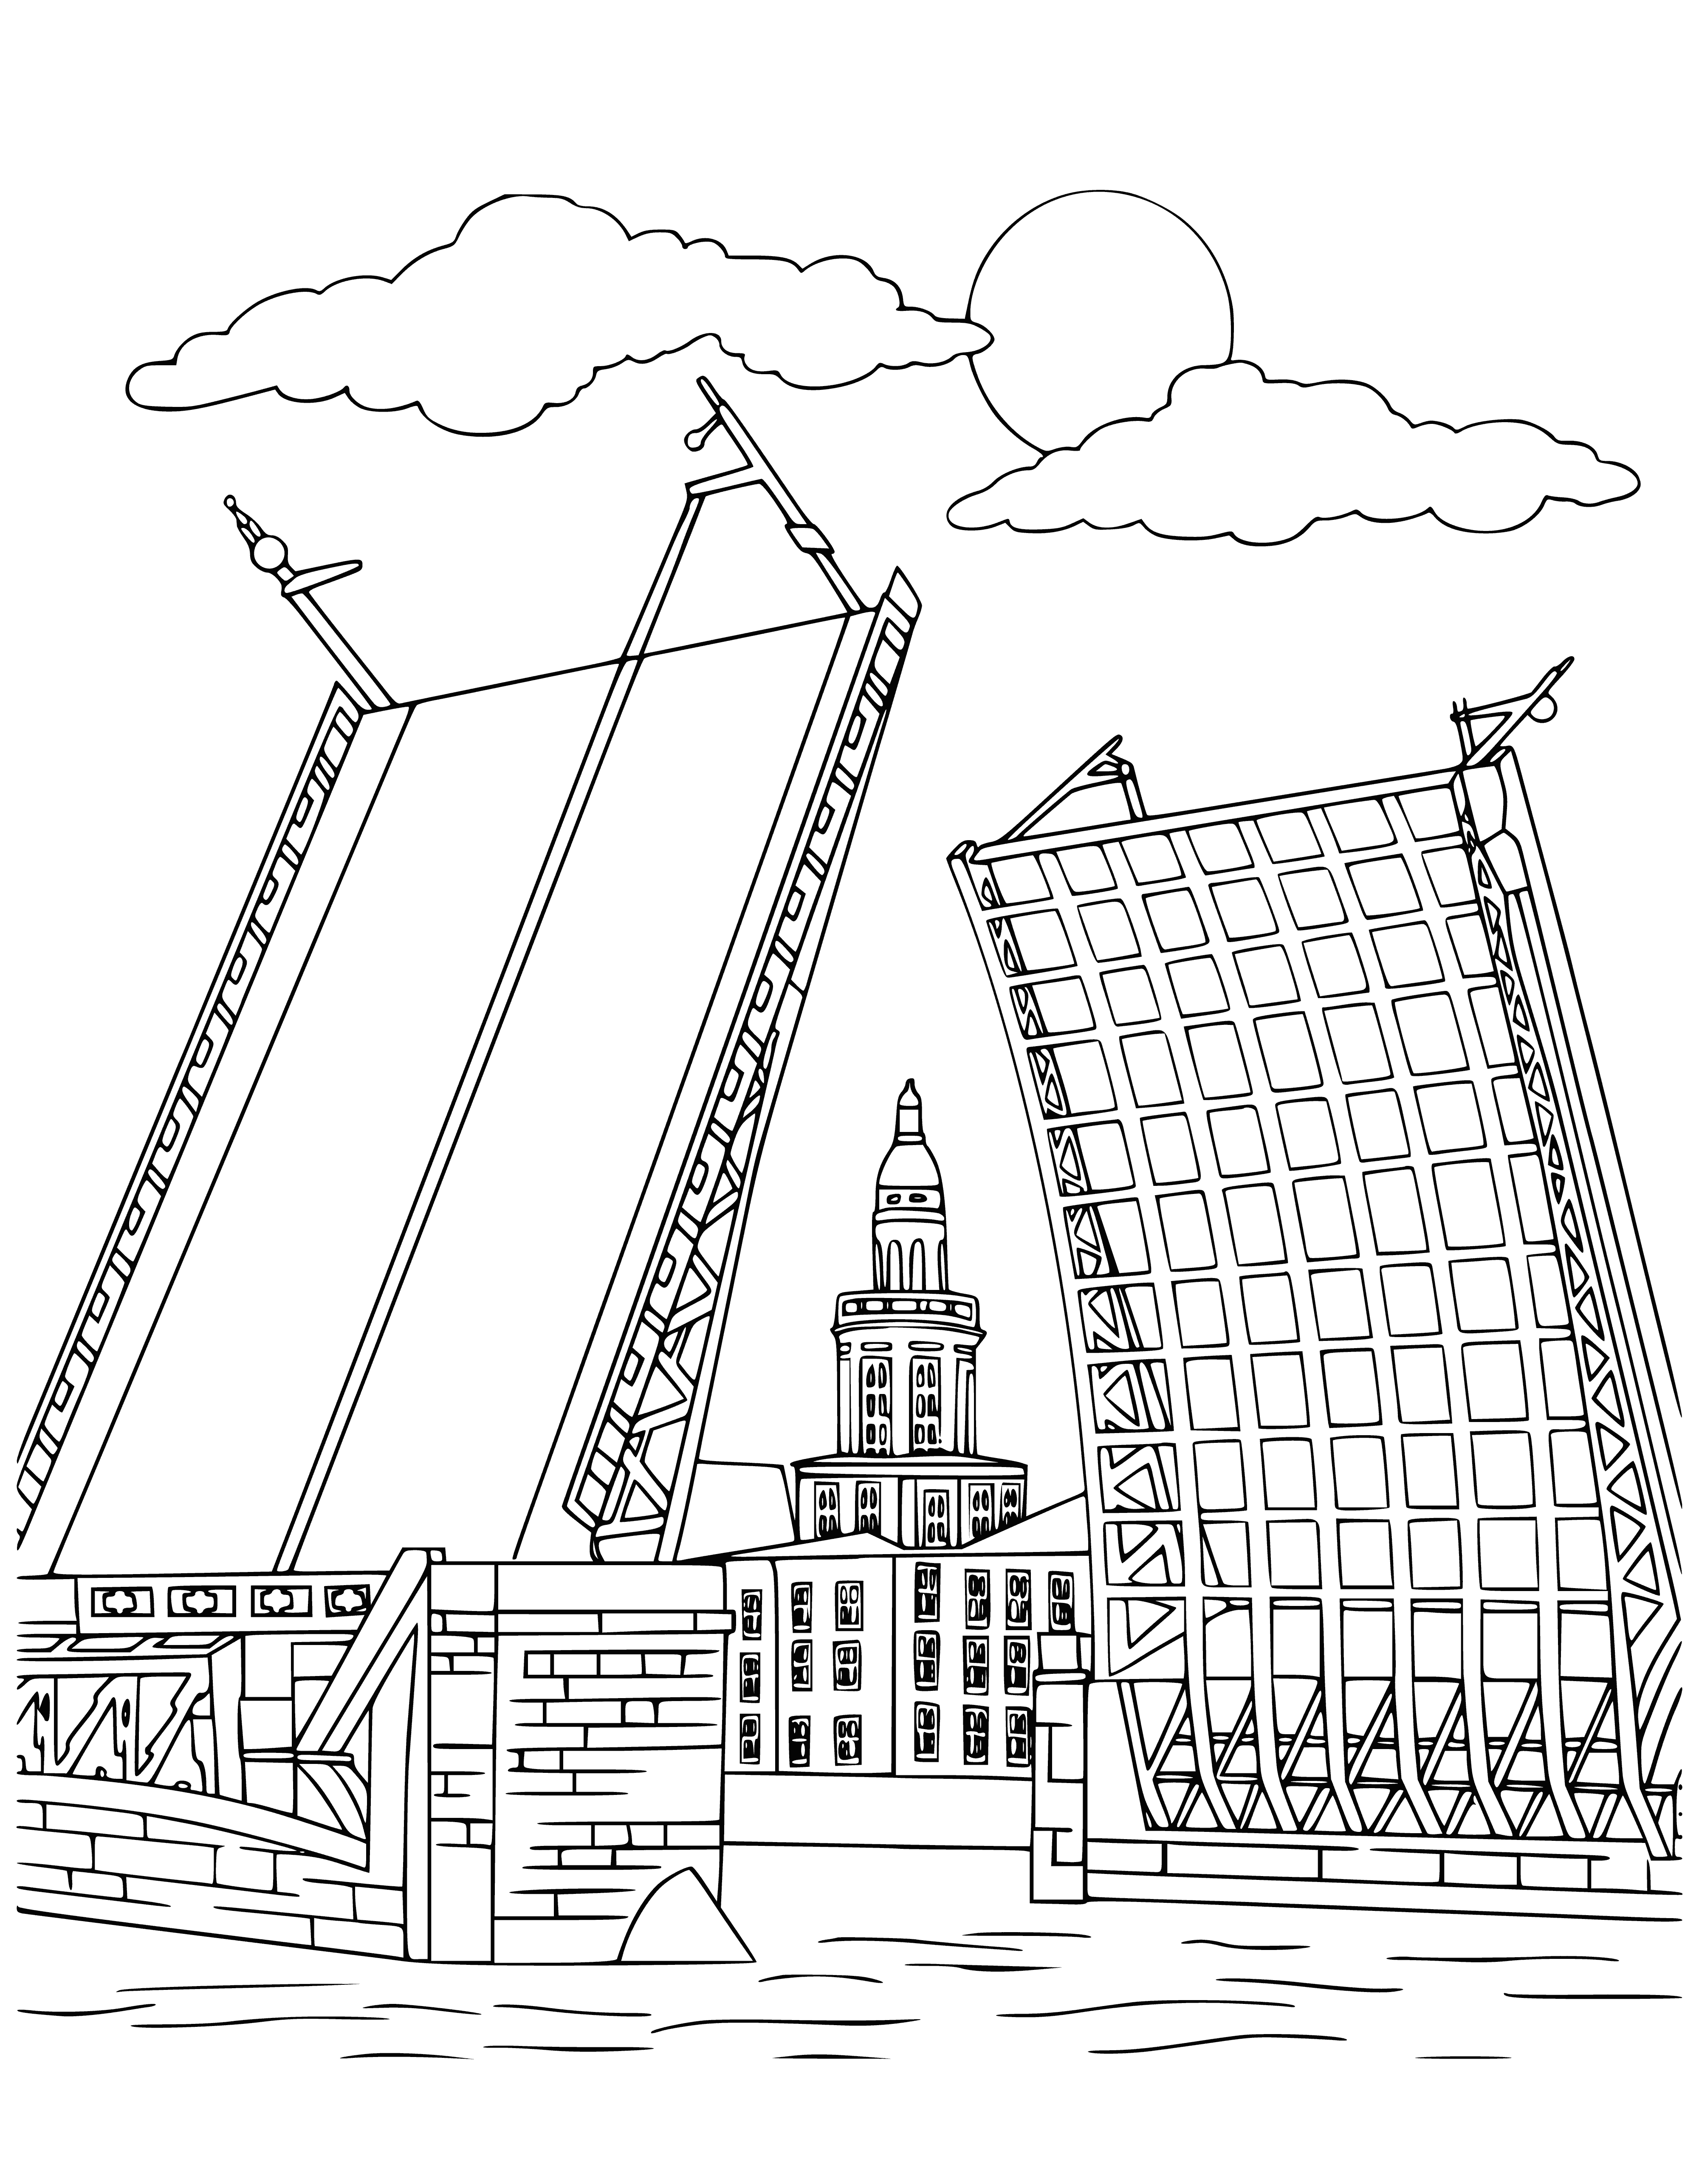 Drawbridge in St. Petersburg. Russia coloring page